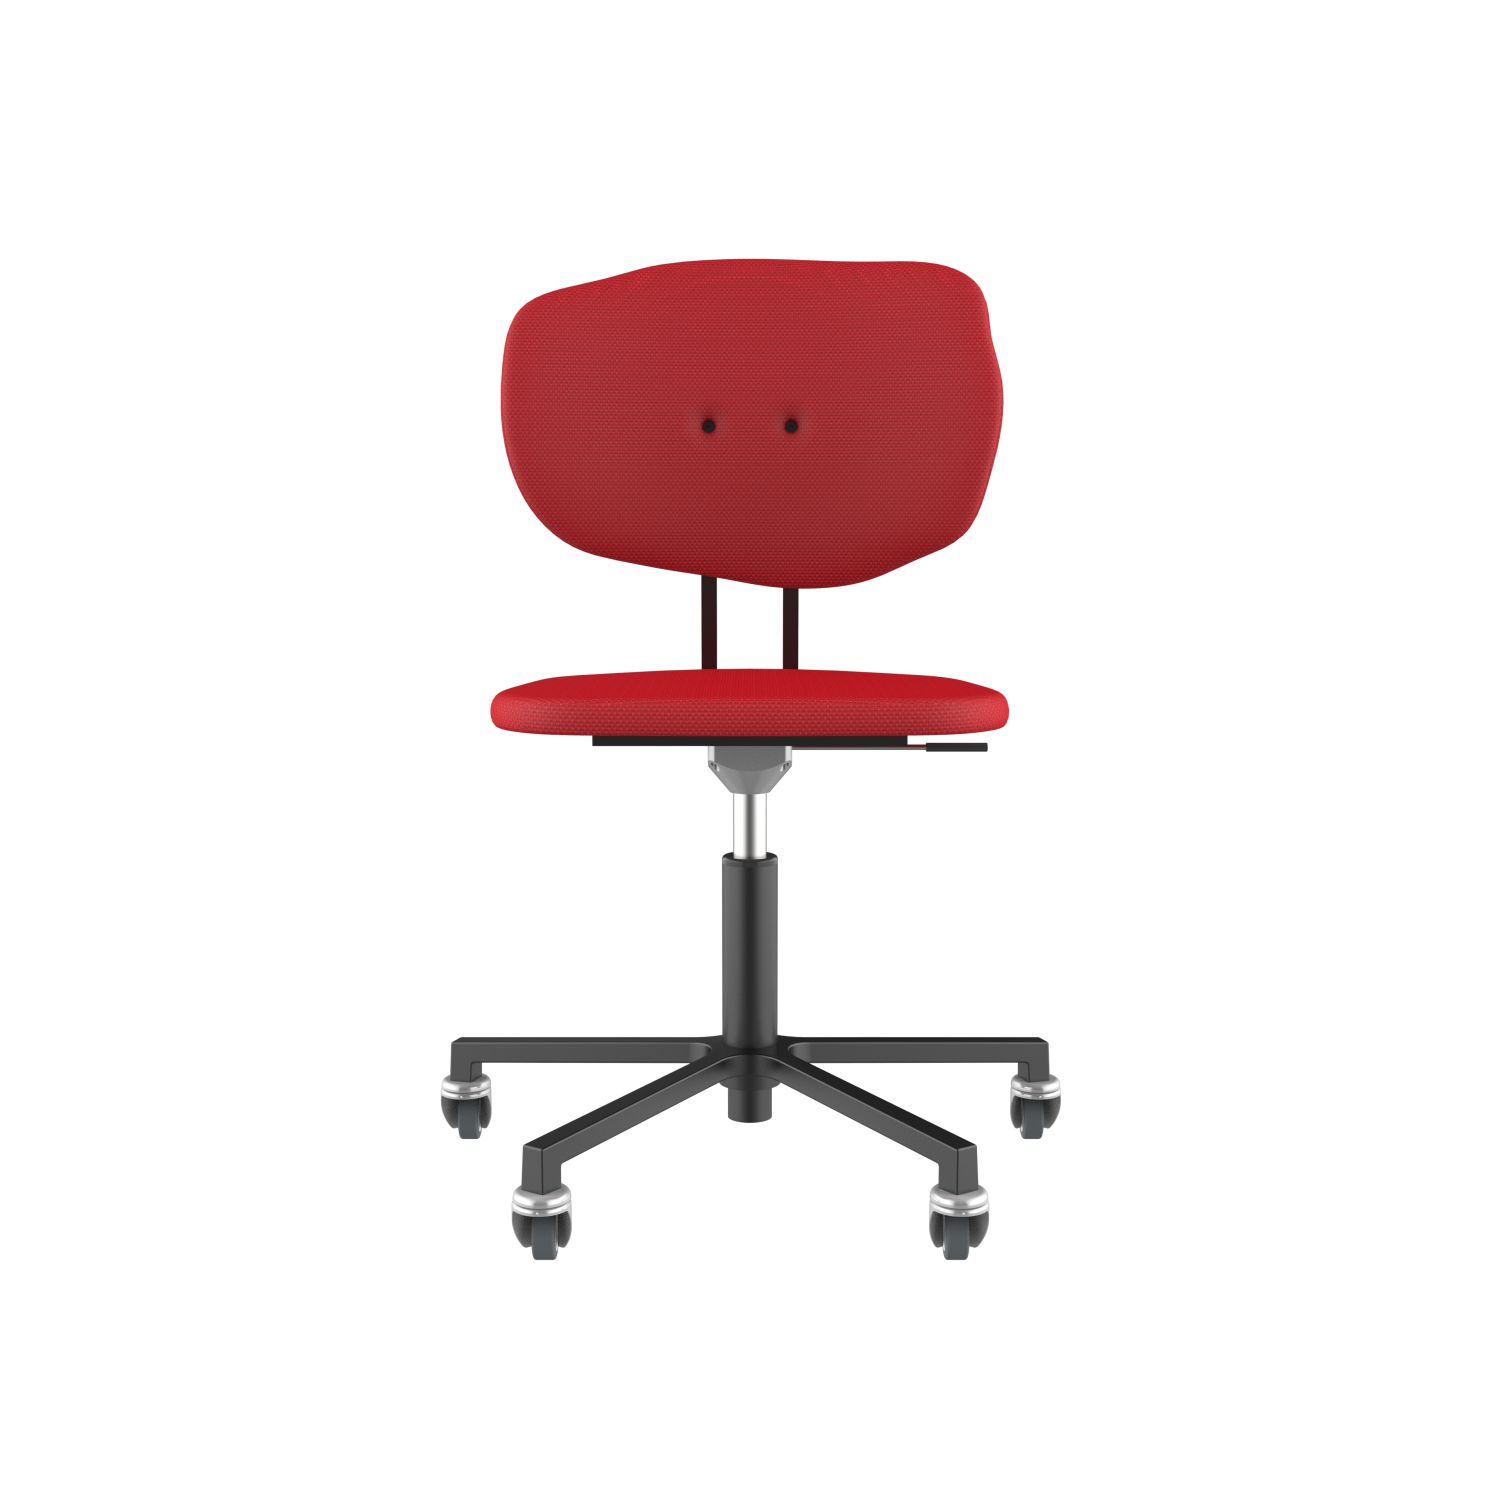 lensvelt maarten baas office chair without armrests backrest f grenada red 010 black ral9005 soft wheels